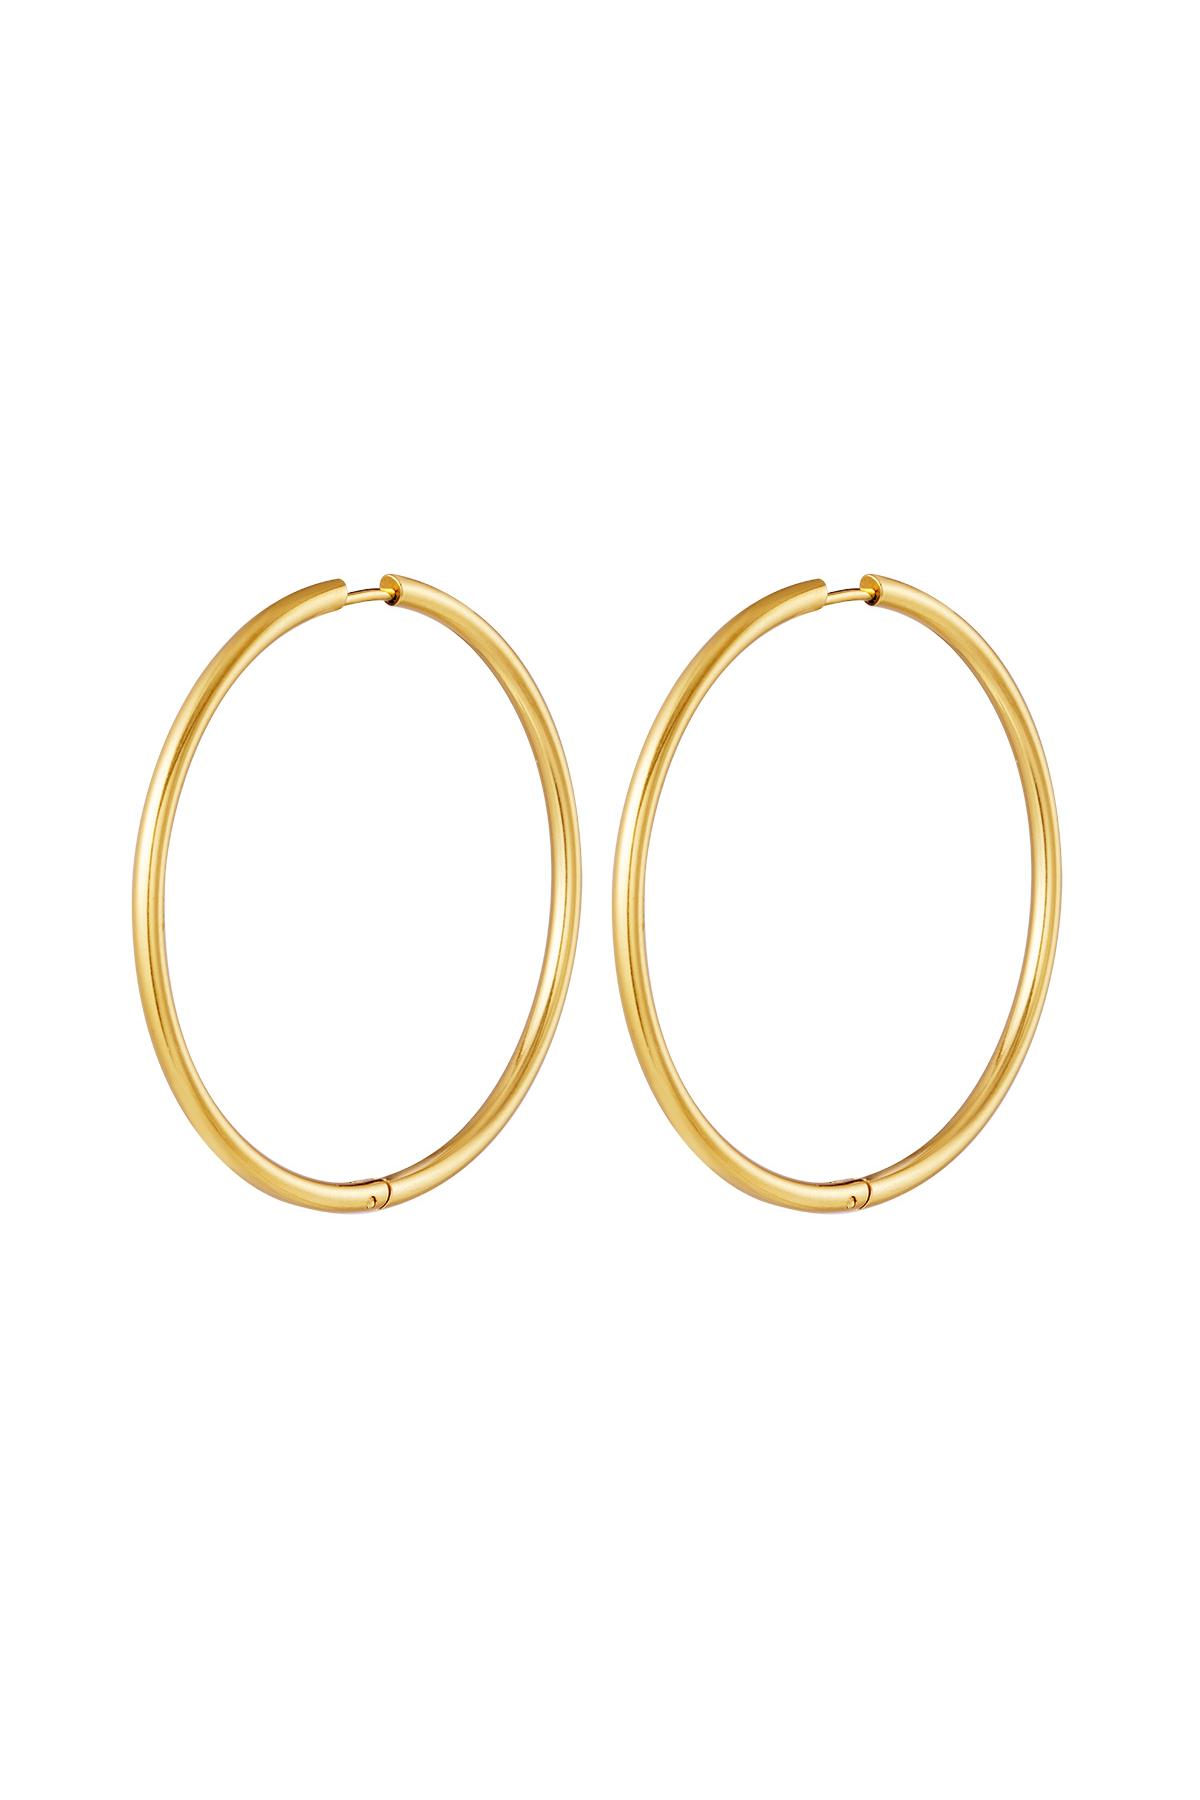 Stainless steel earrings hoops large Gold h5 